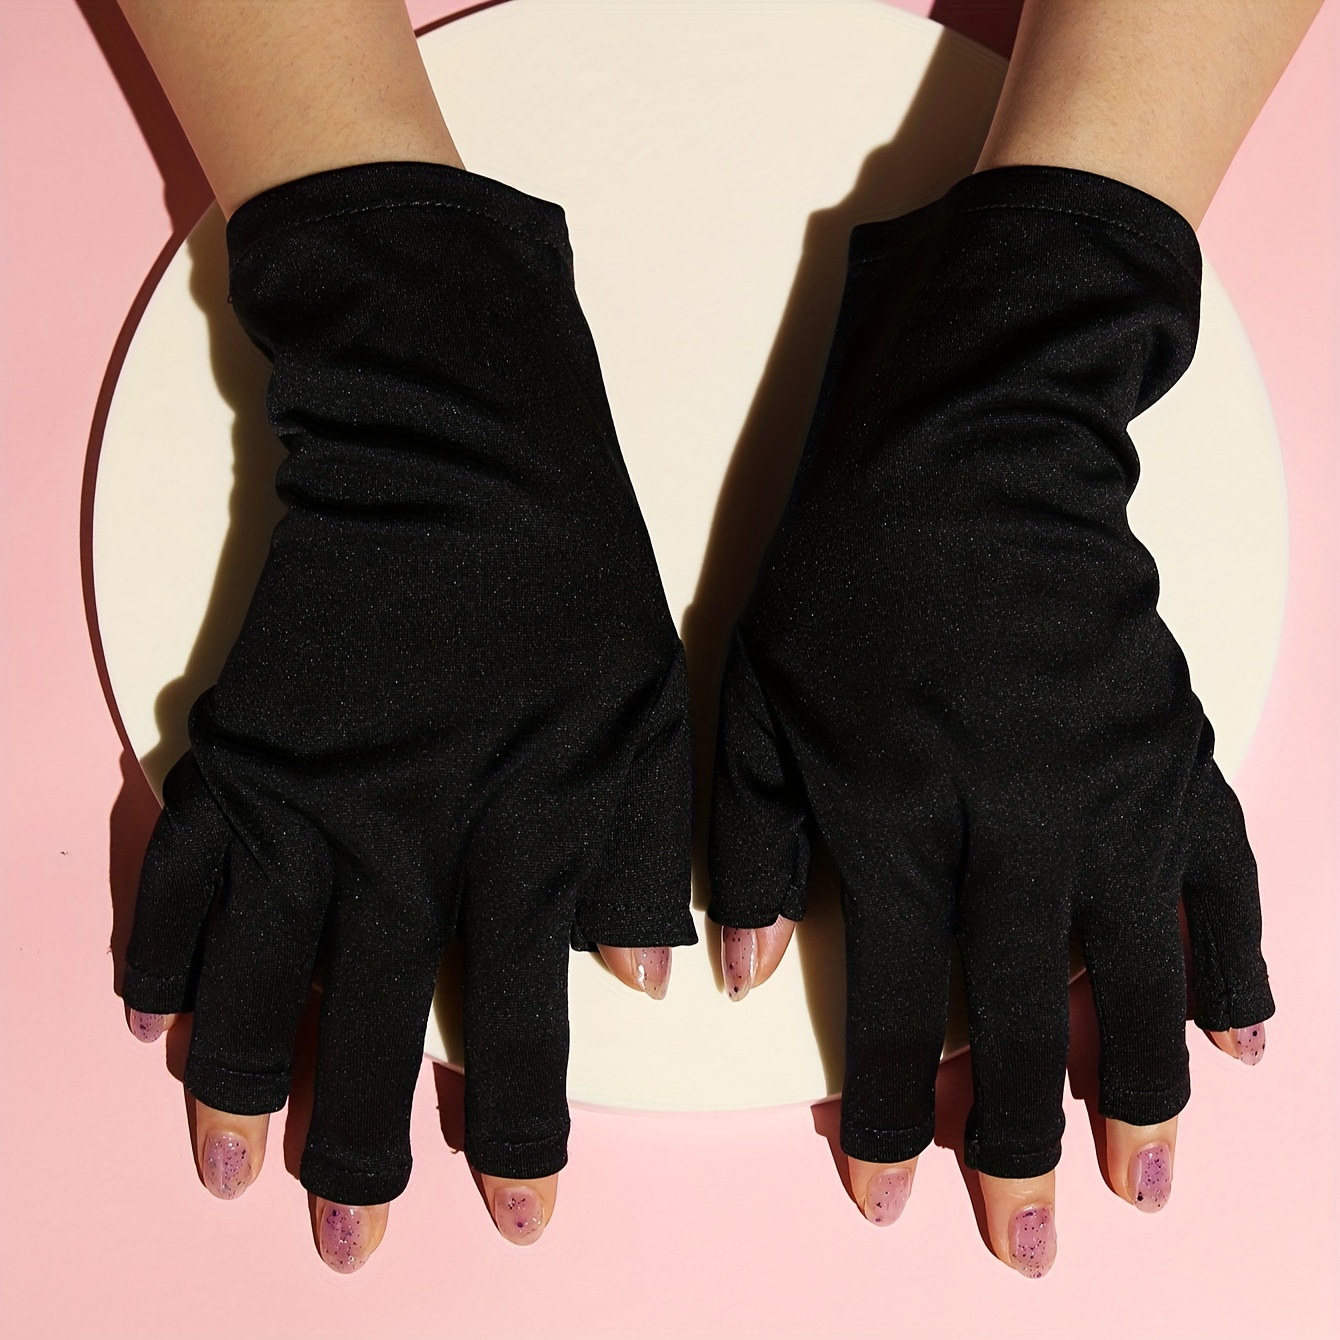 Nail Art Glove UV Protection Glove Anti Black Gloves Protecter For